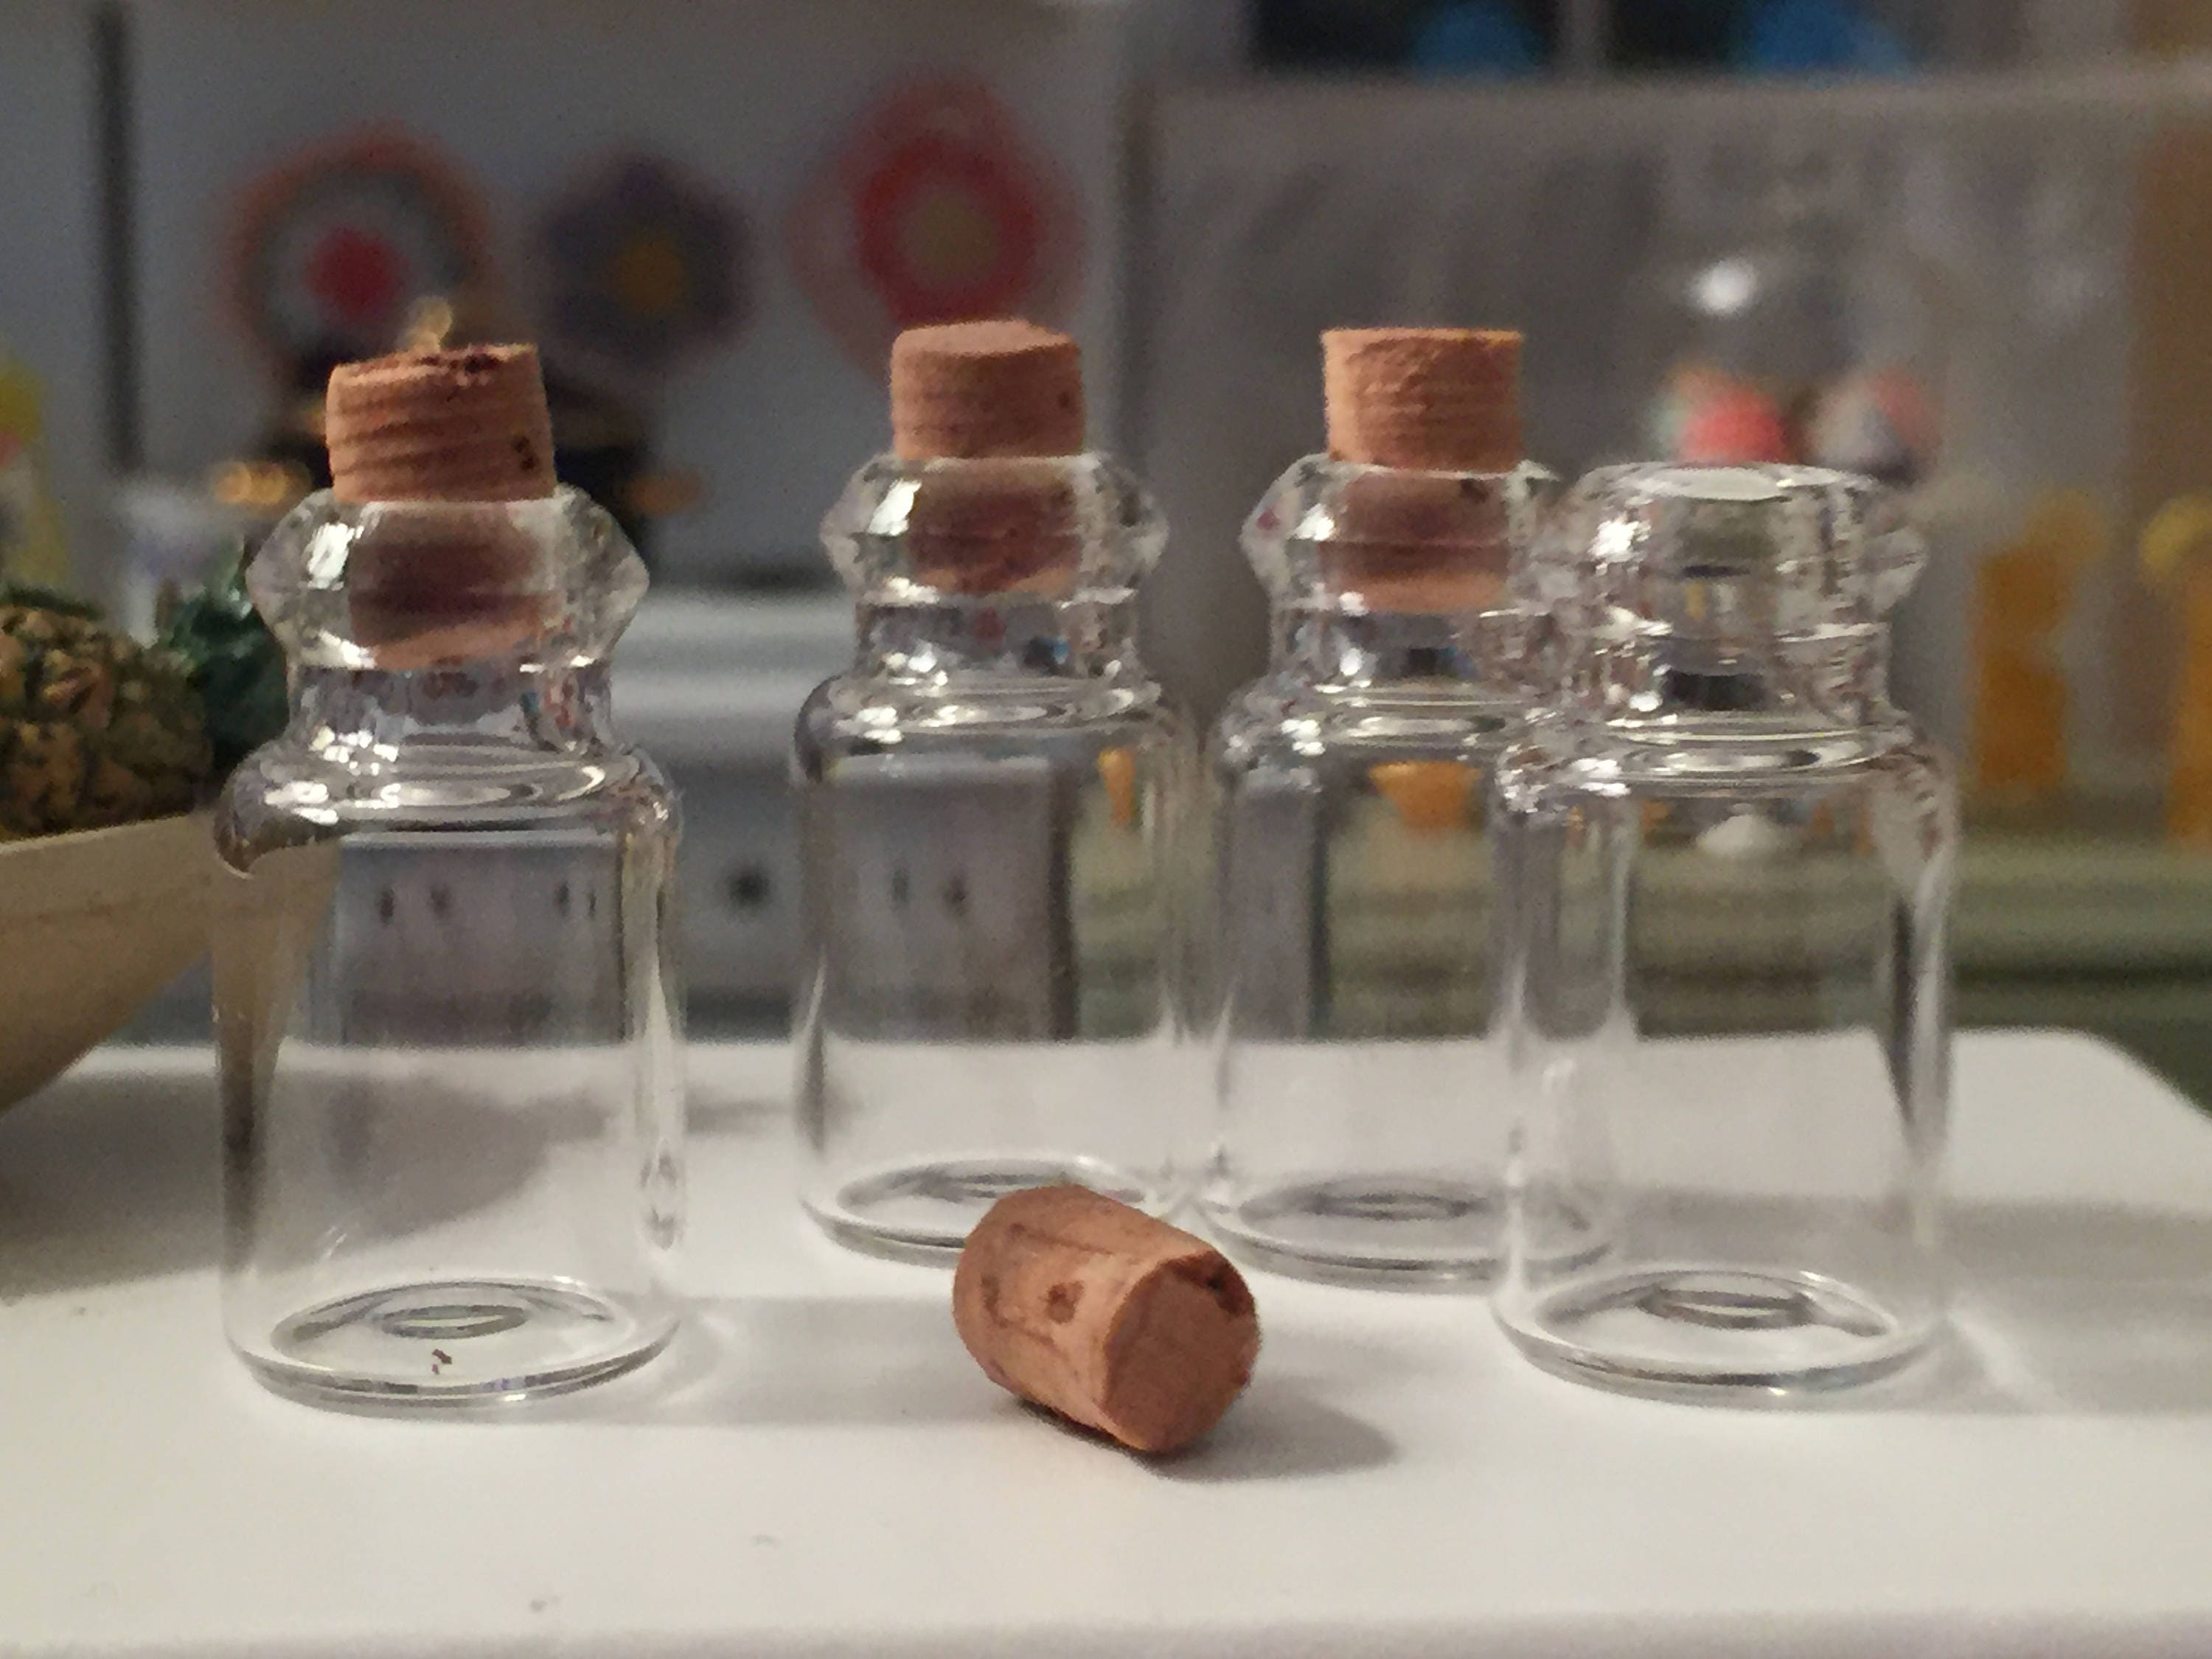 Craft Decor Glass Jars with Cork Lids